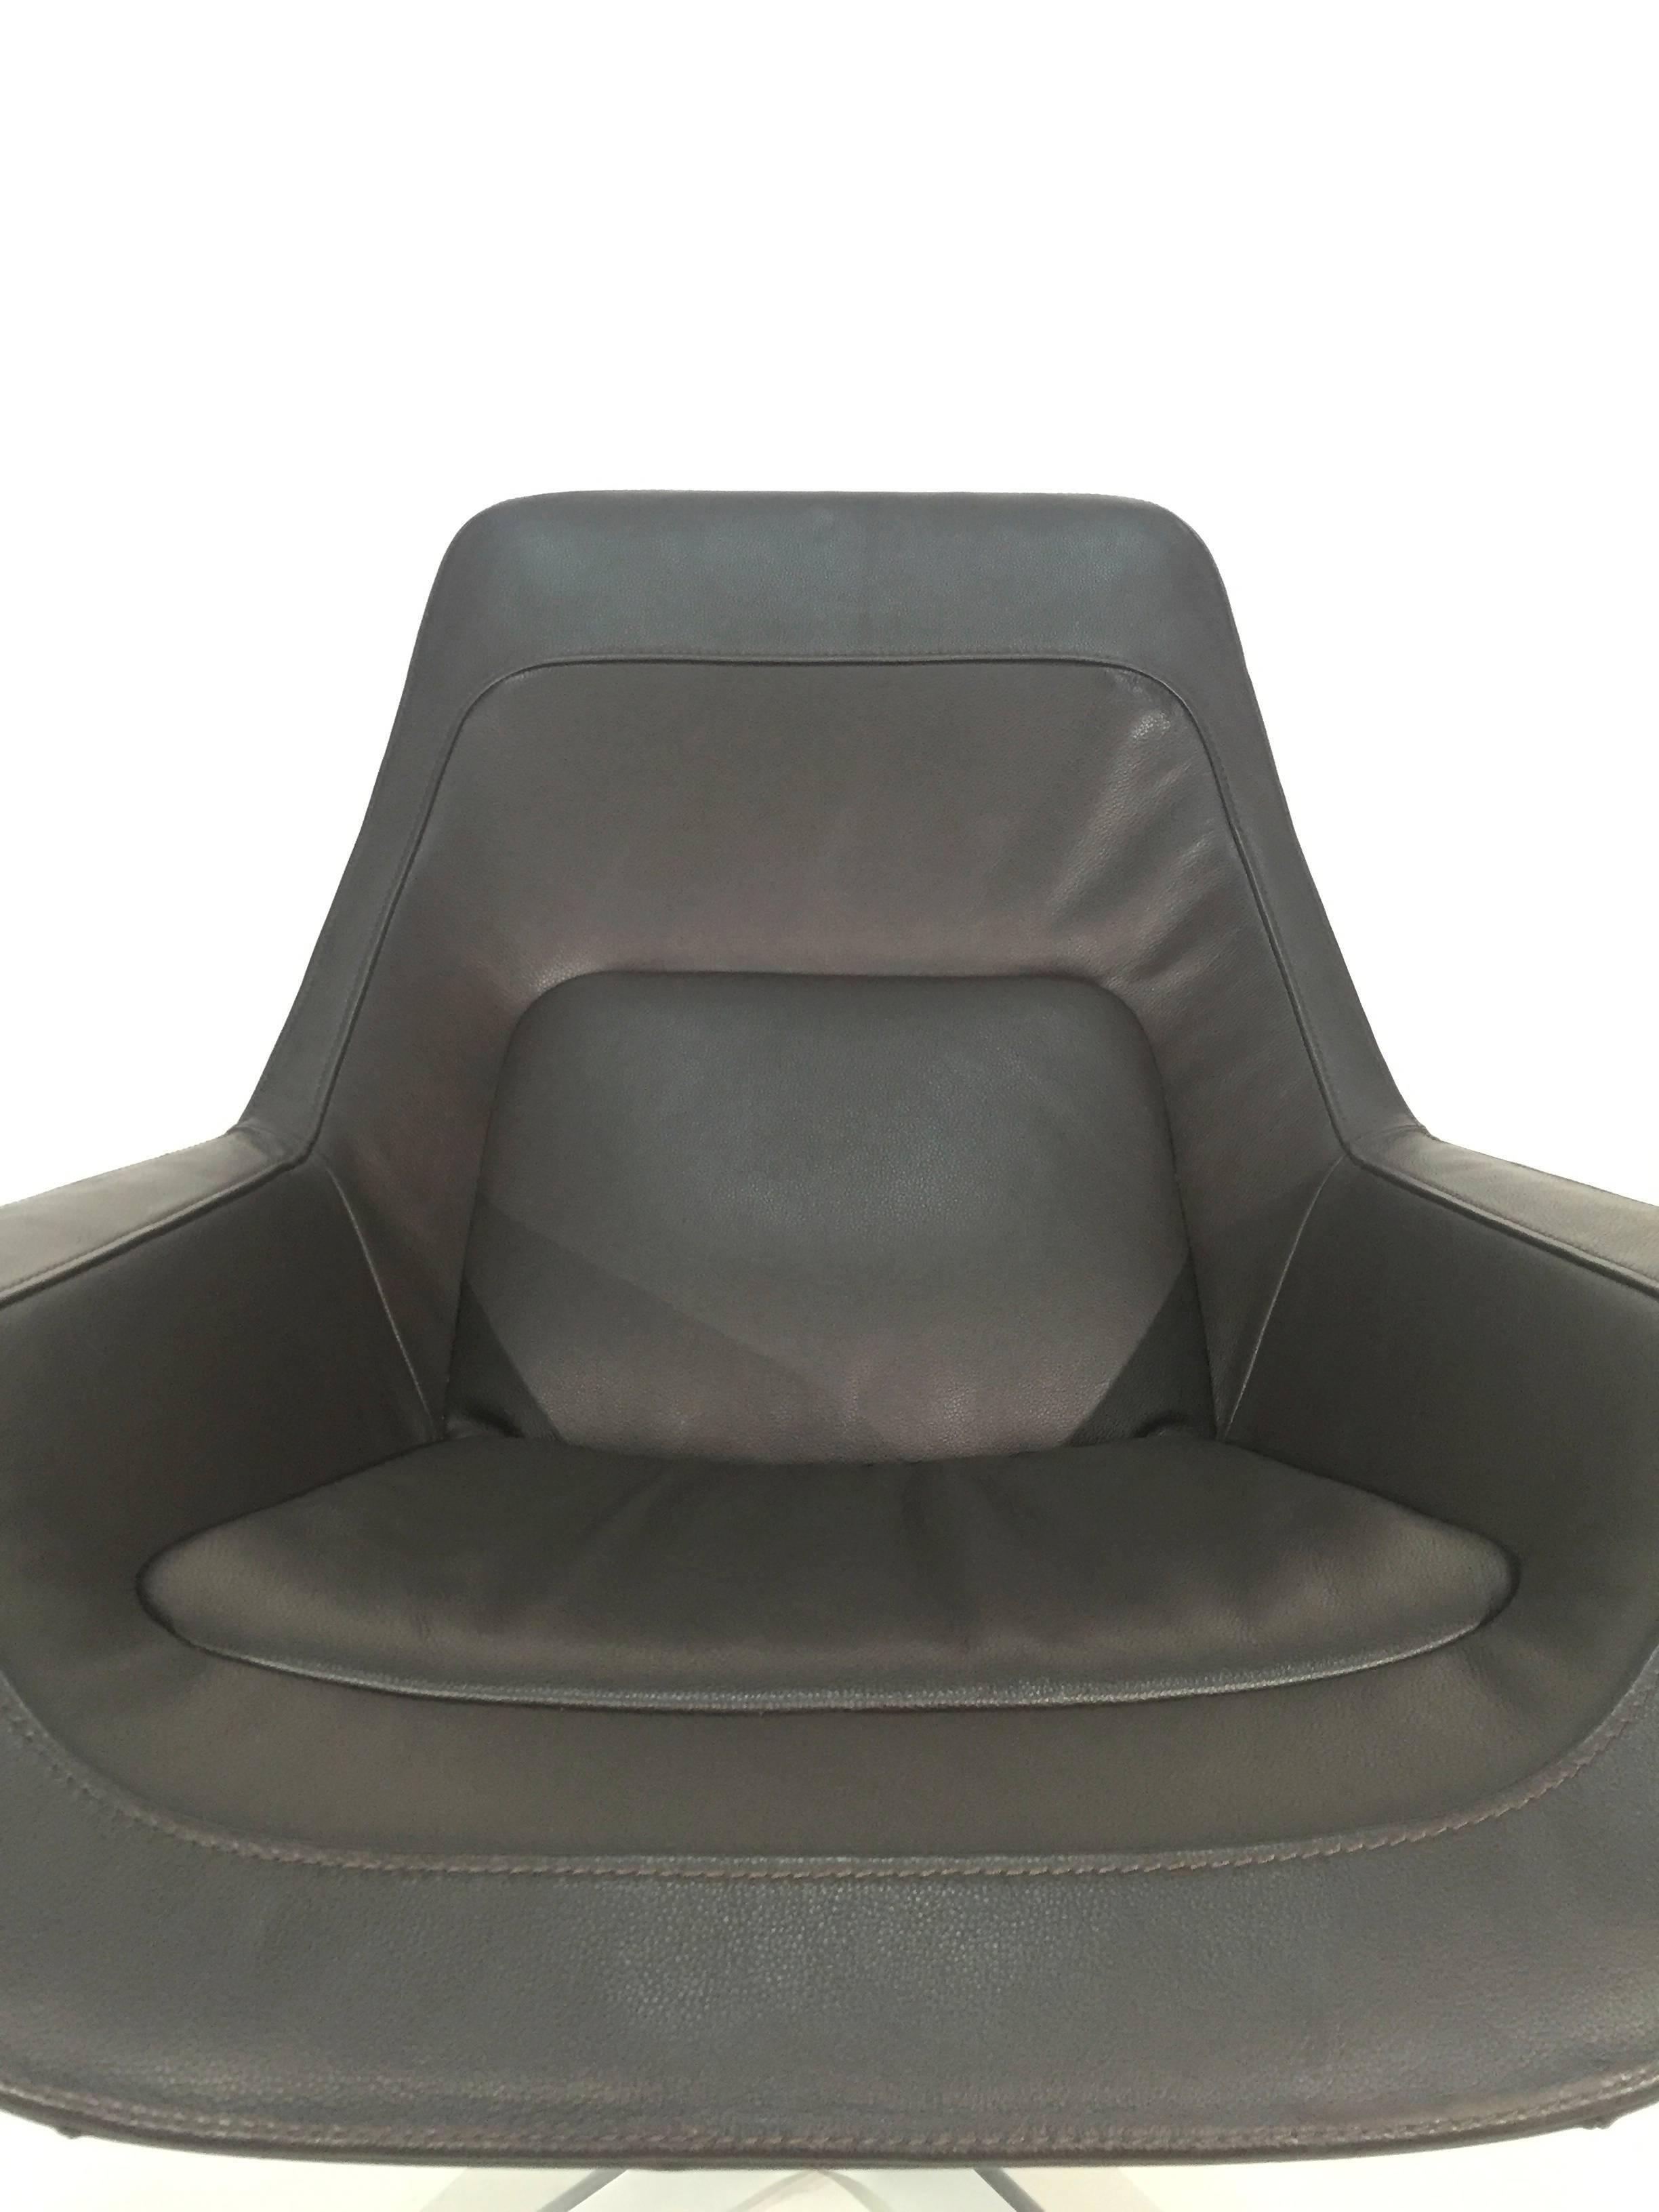 De Sede DS-144 Armchair in Leather Select Cigarro 1